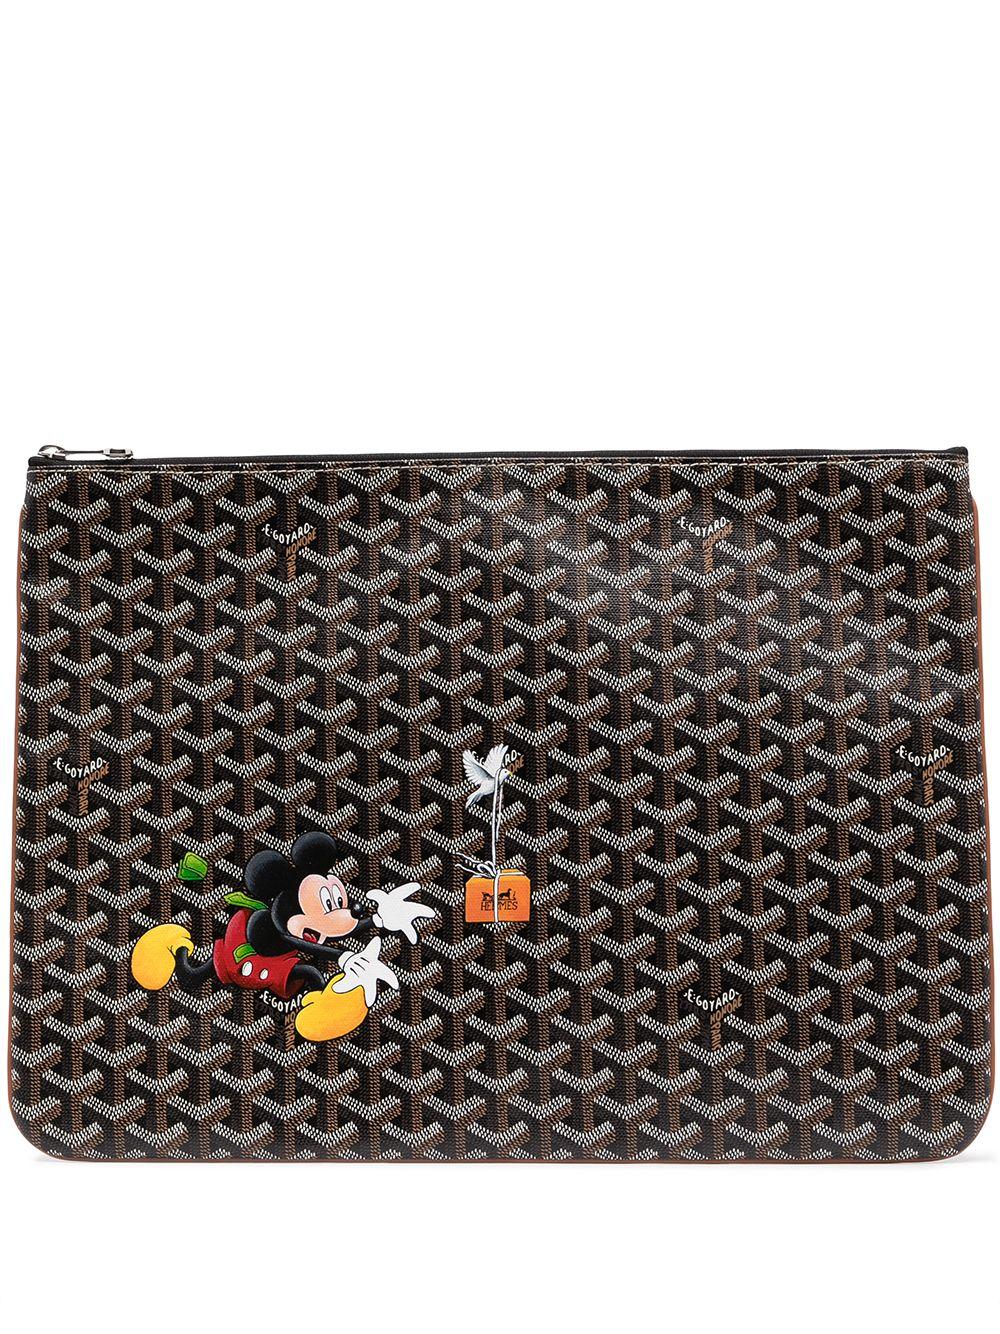 Goyard Mickey Mouse Clutch Bag in Brown | Lyst Australia